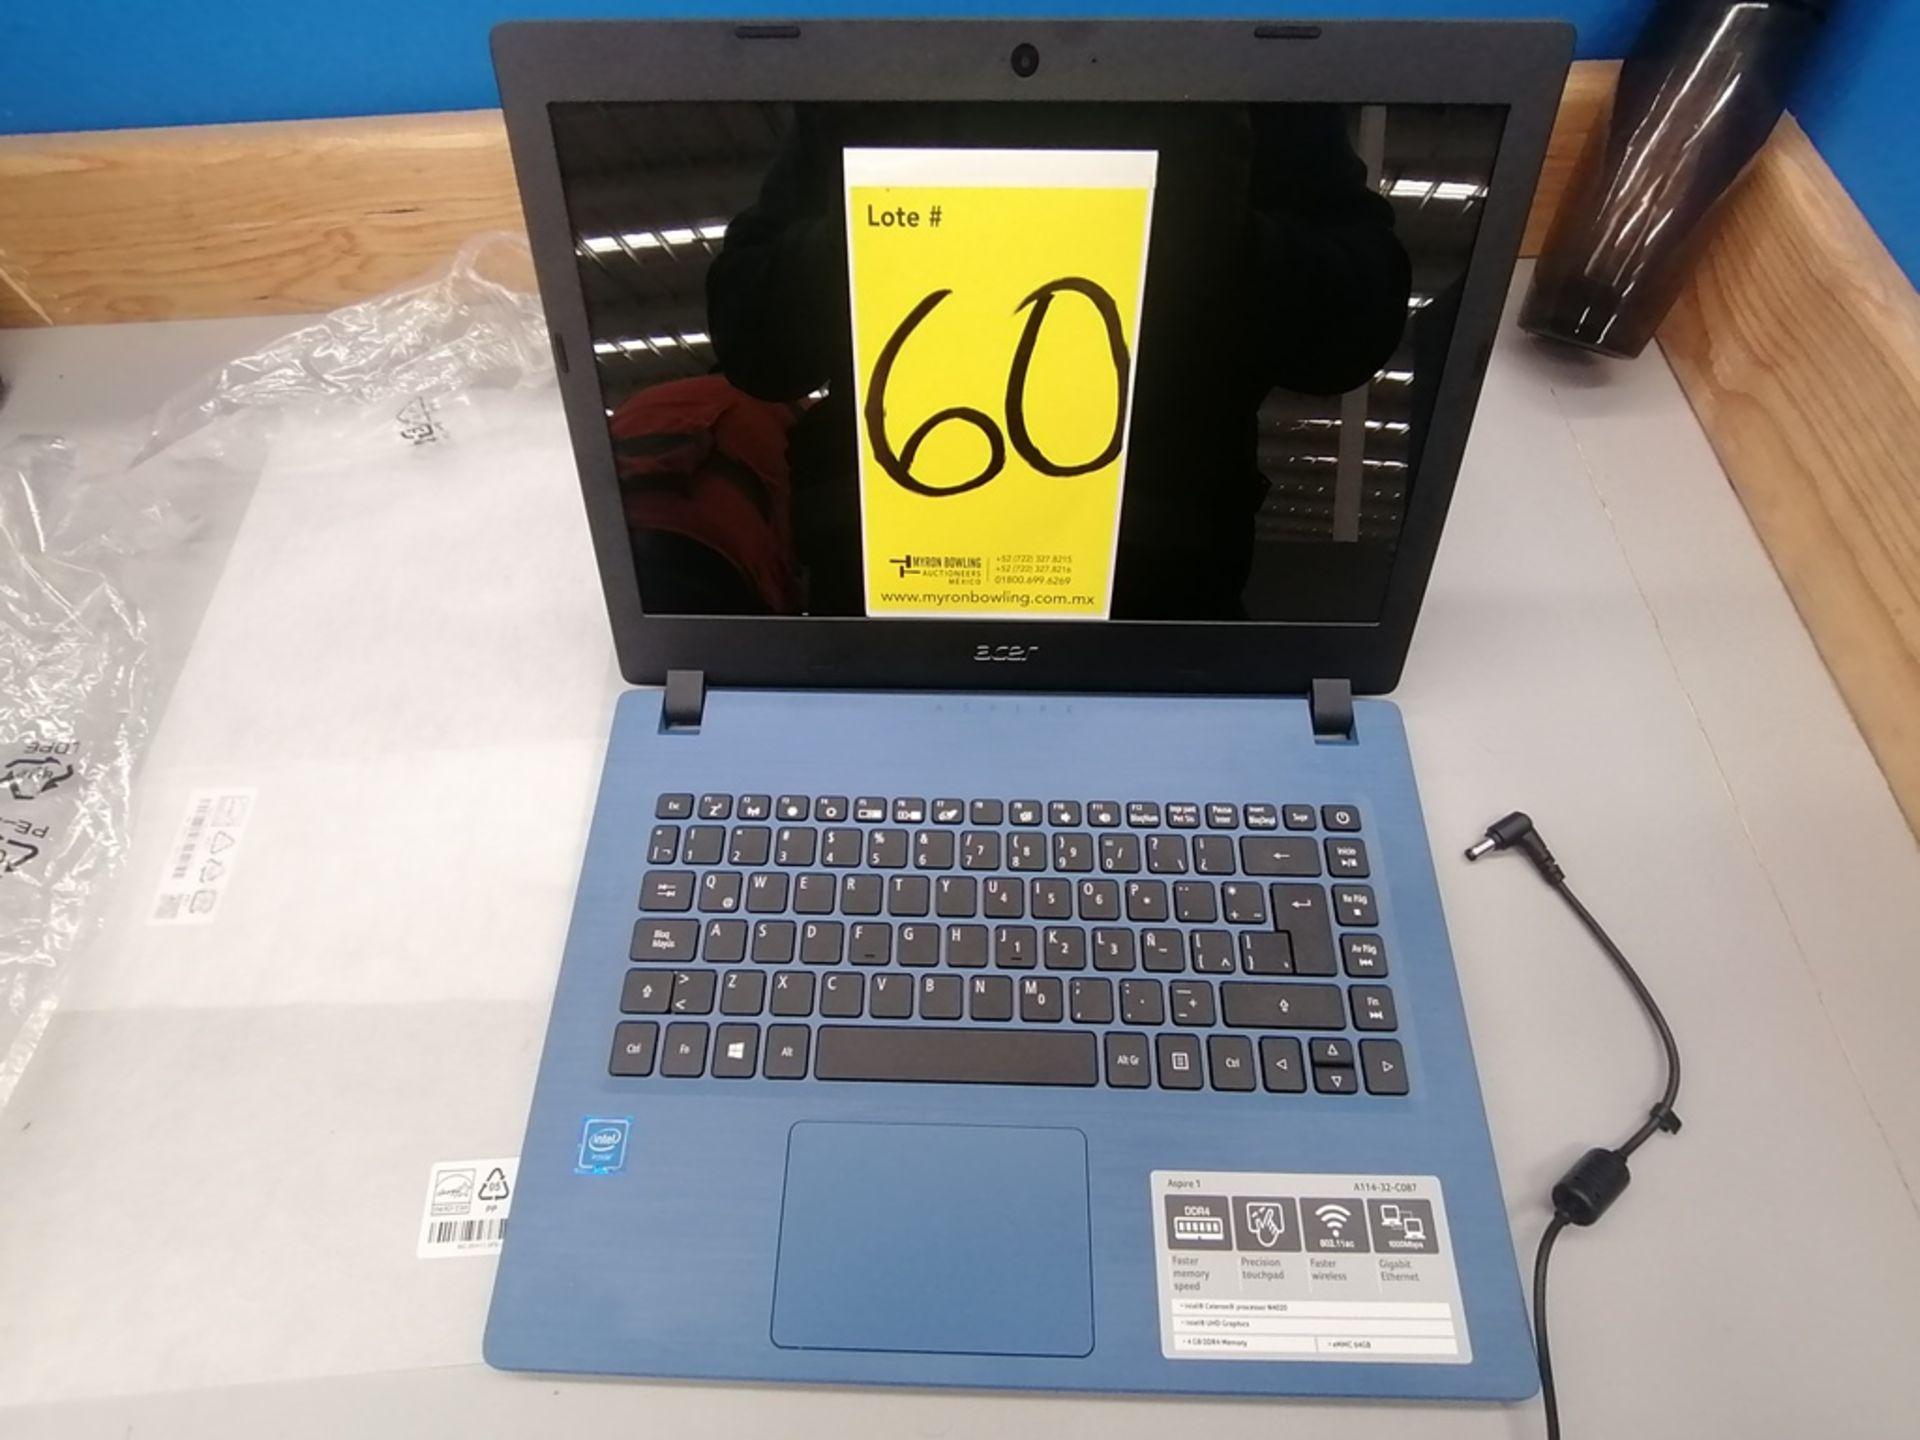 1 Computadora tipo Laptop marca Acer Modelo Aspire 114, Serie NXGW9AL004120391CA7600, Intel Celeron